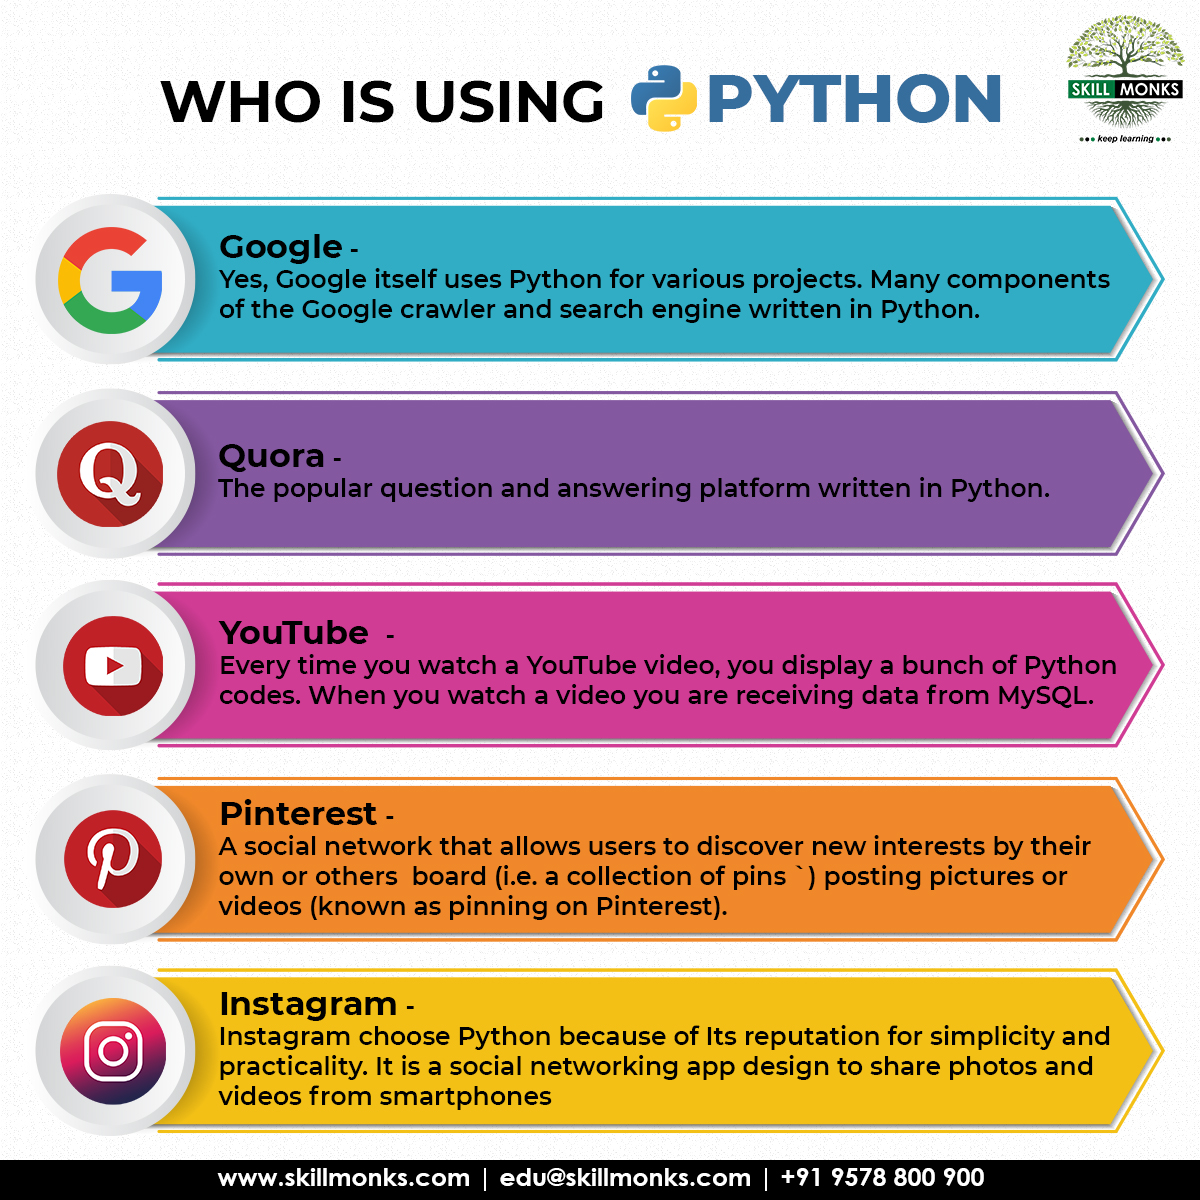 Why Top Tier Companies Use #Python 

#Google #Quora #YouTube #Pinterest #Instagram #PythonProgramming #java #coding #programmer #javascript #developer #coder #html #technology #machinelearning #datascience #php #linux #css #pythonsofinstagram #hacker